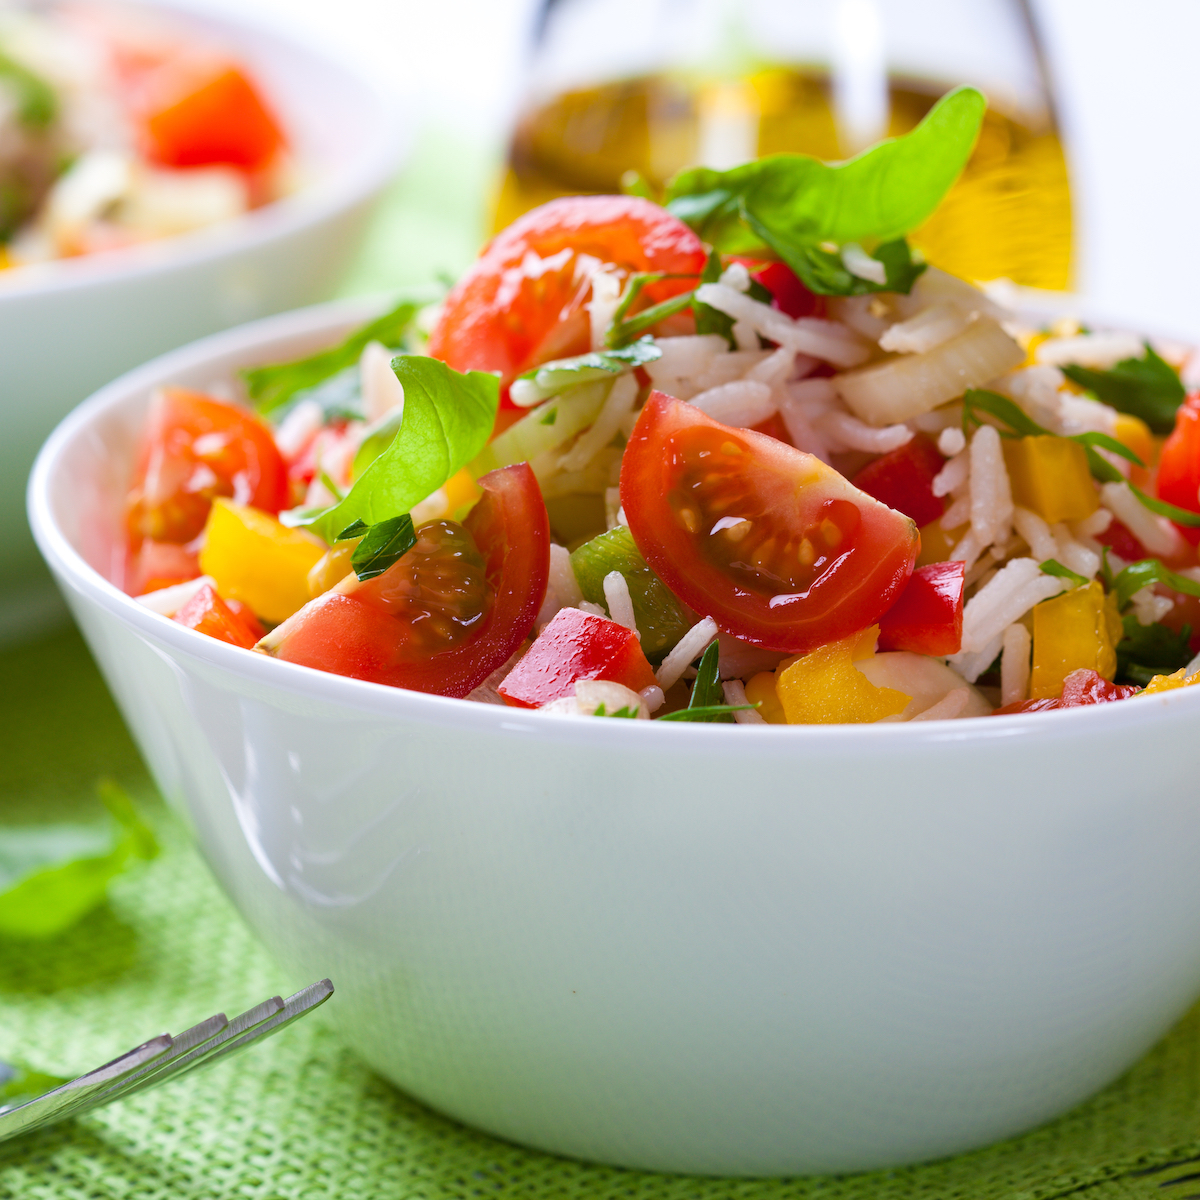 Salade de riz tomate poivron basilic persil ©De Barbara Dudzinska shutterstockv